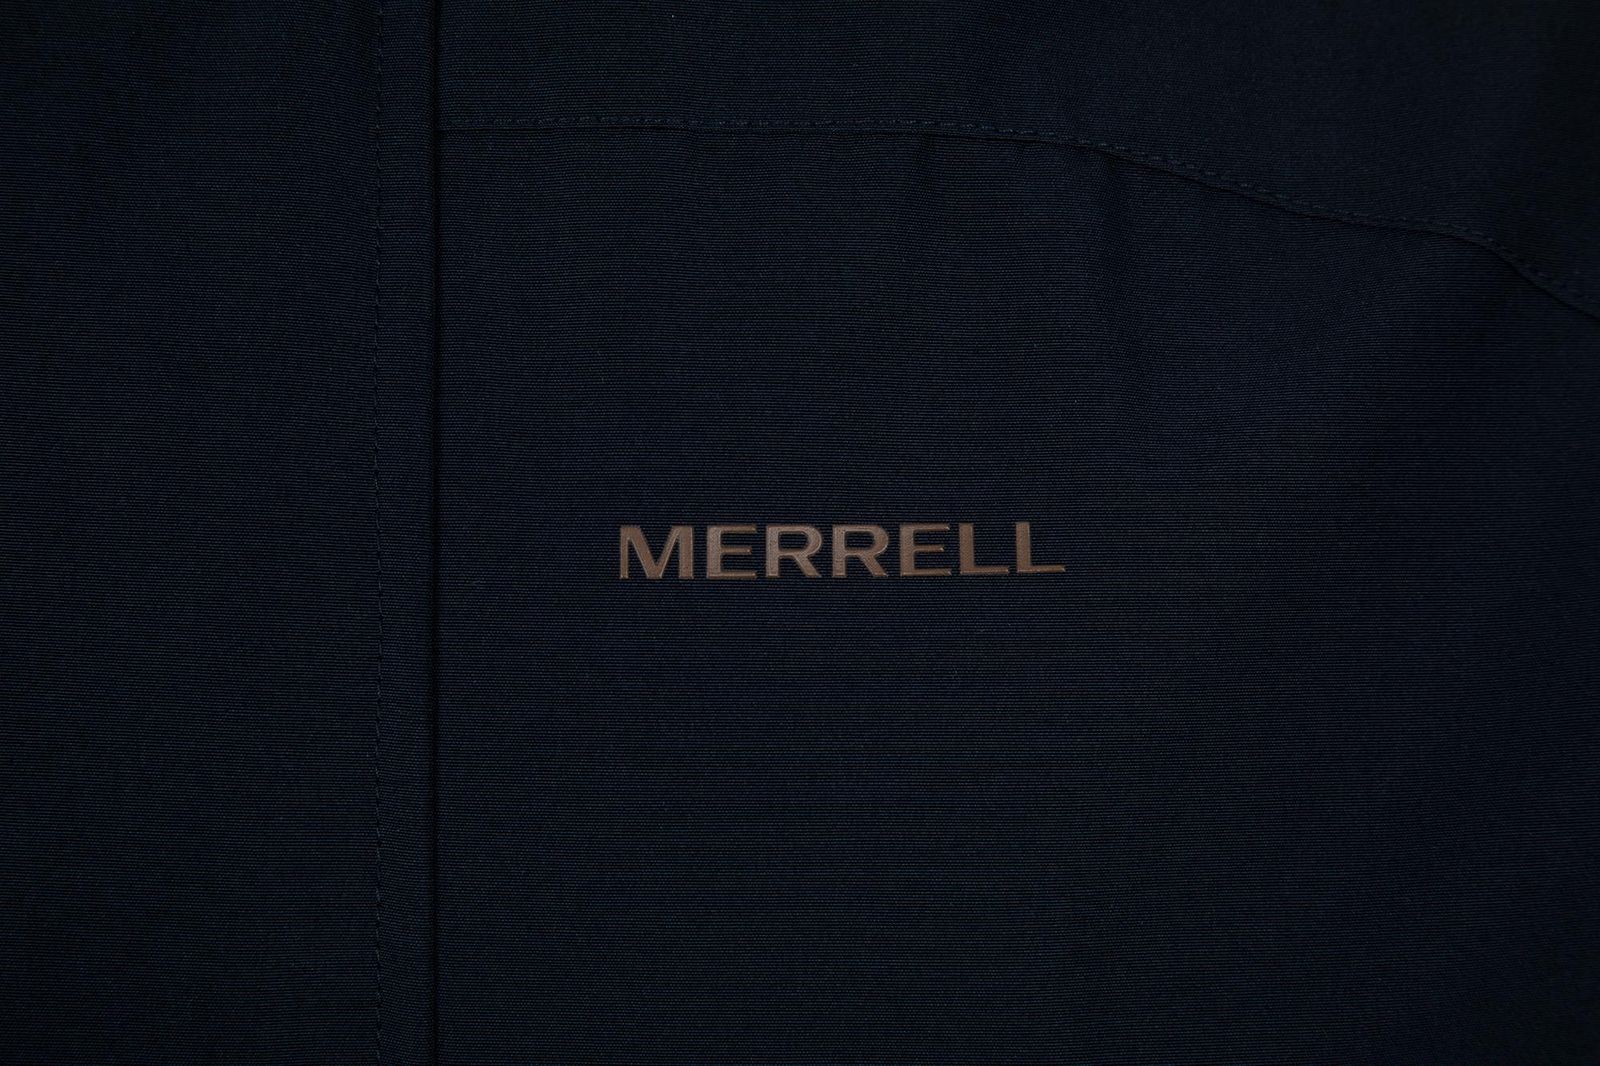   Merrell Men's Windbreaker, : -. S19AMRJAM09-Z4.  50